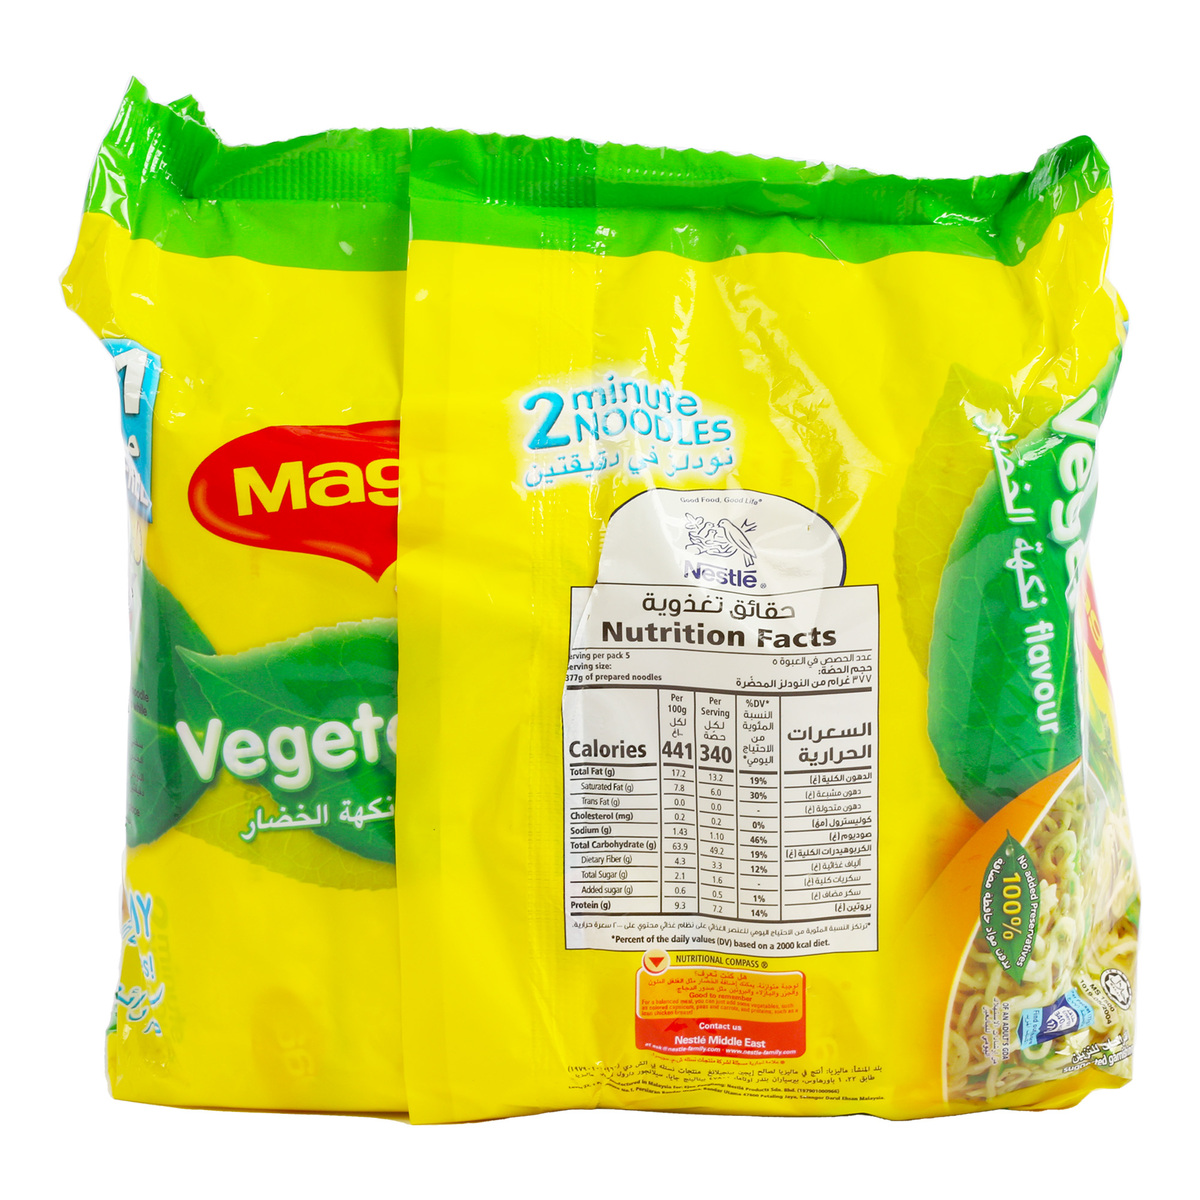 Maggi 2 Minute Noodles Vegetable Flavour 77 g 4 + 1